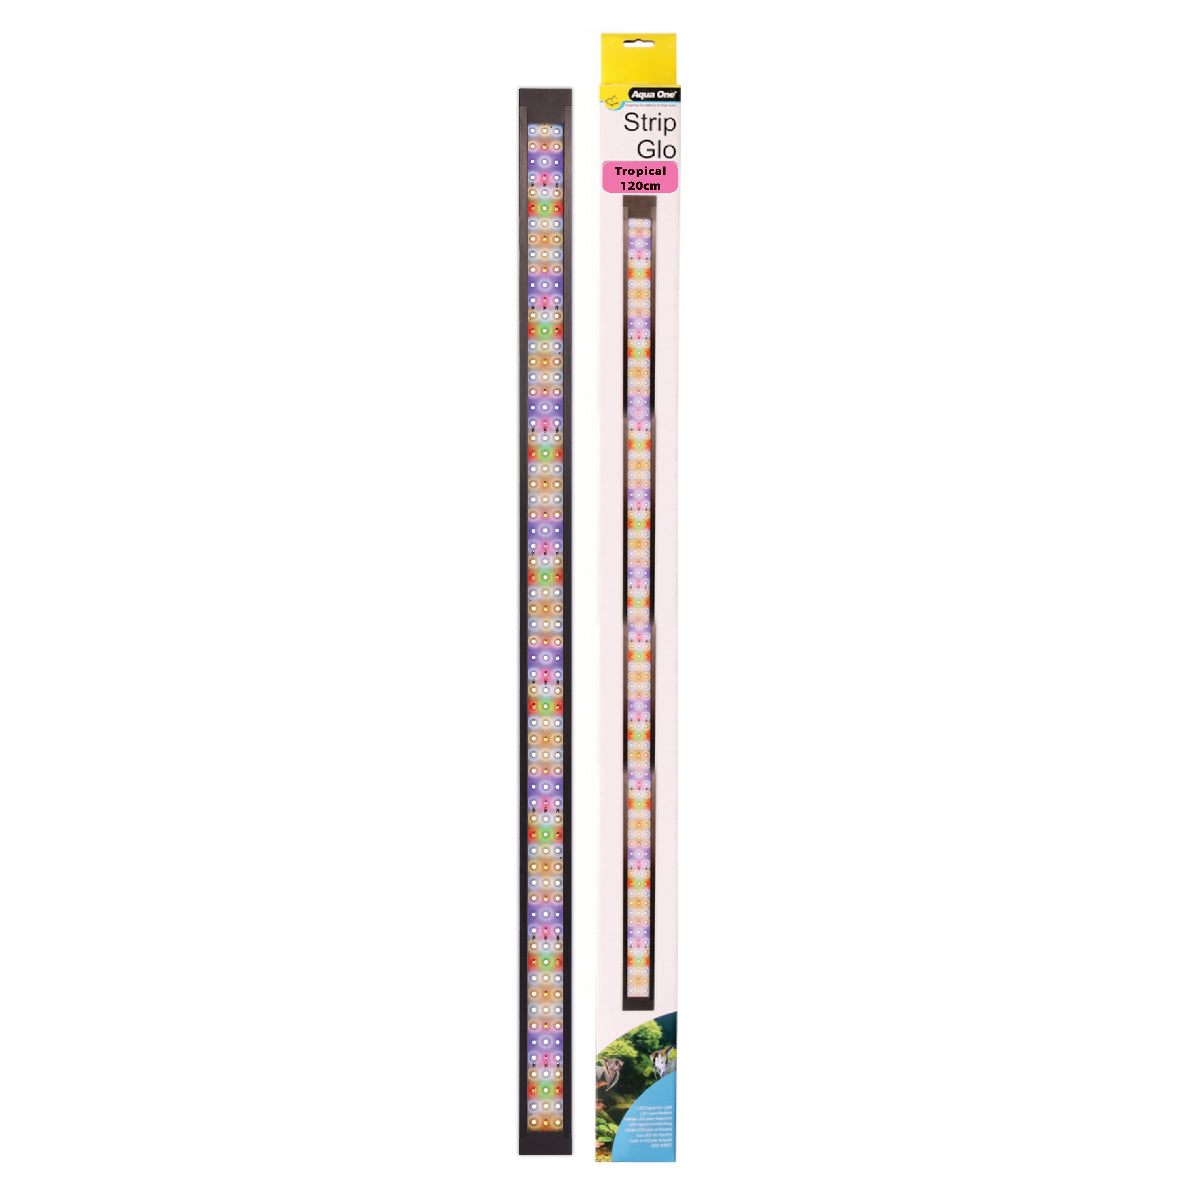 StripGlo LED - Tropical